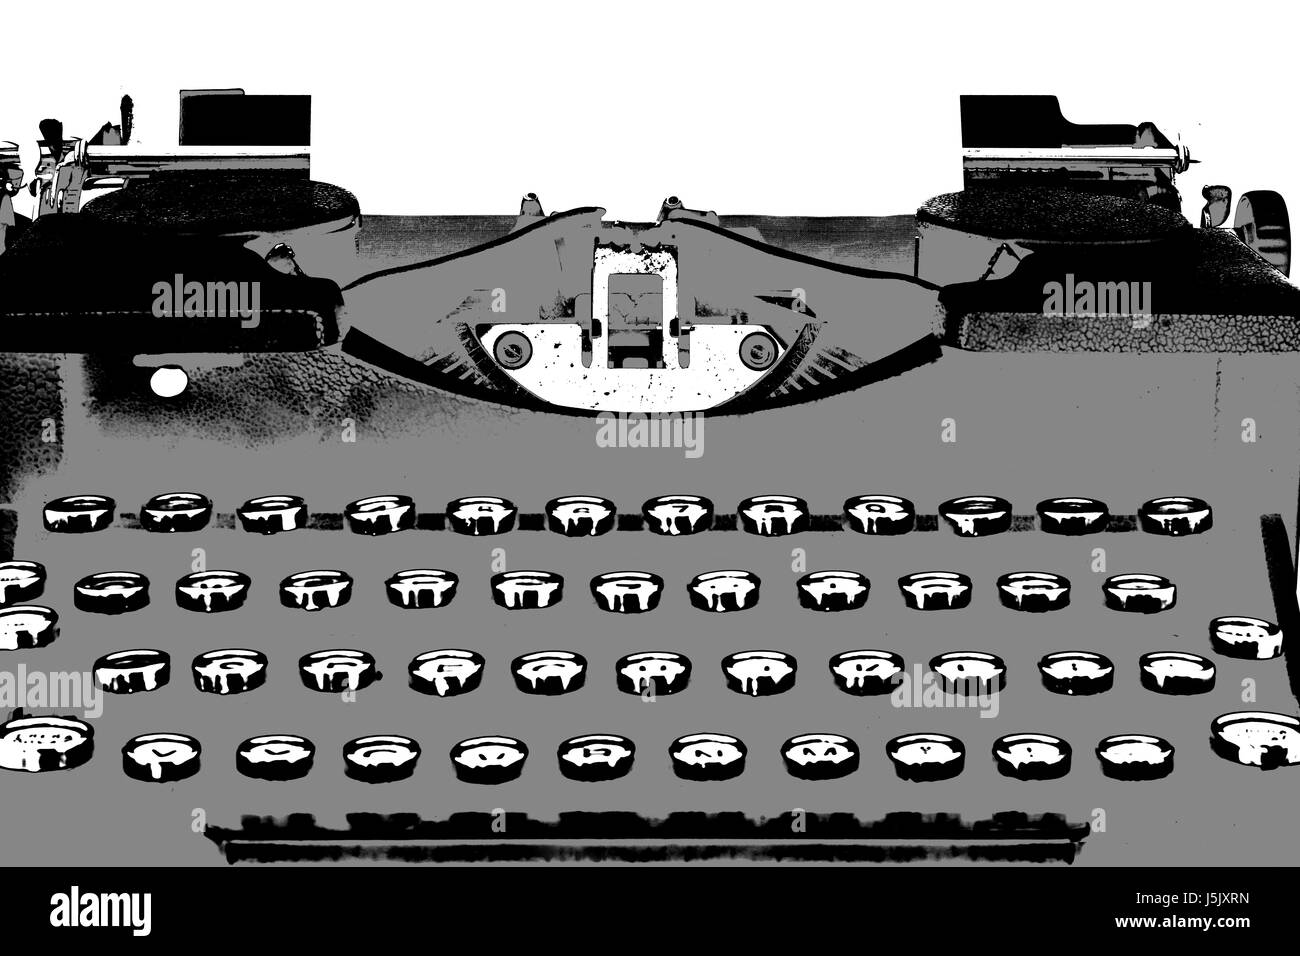 Blank paper in typewriter machine - detail Stock Photo